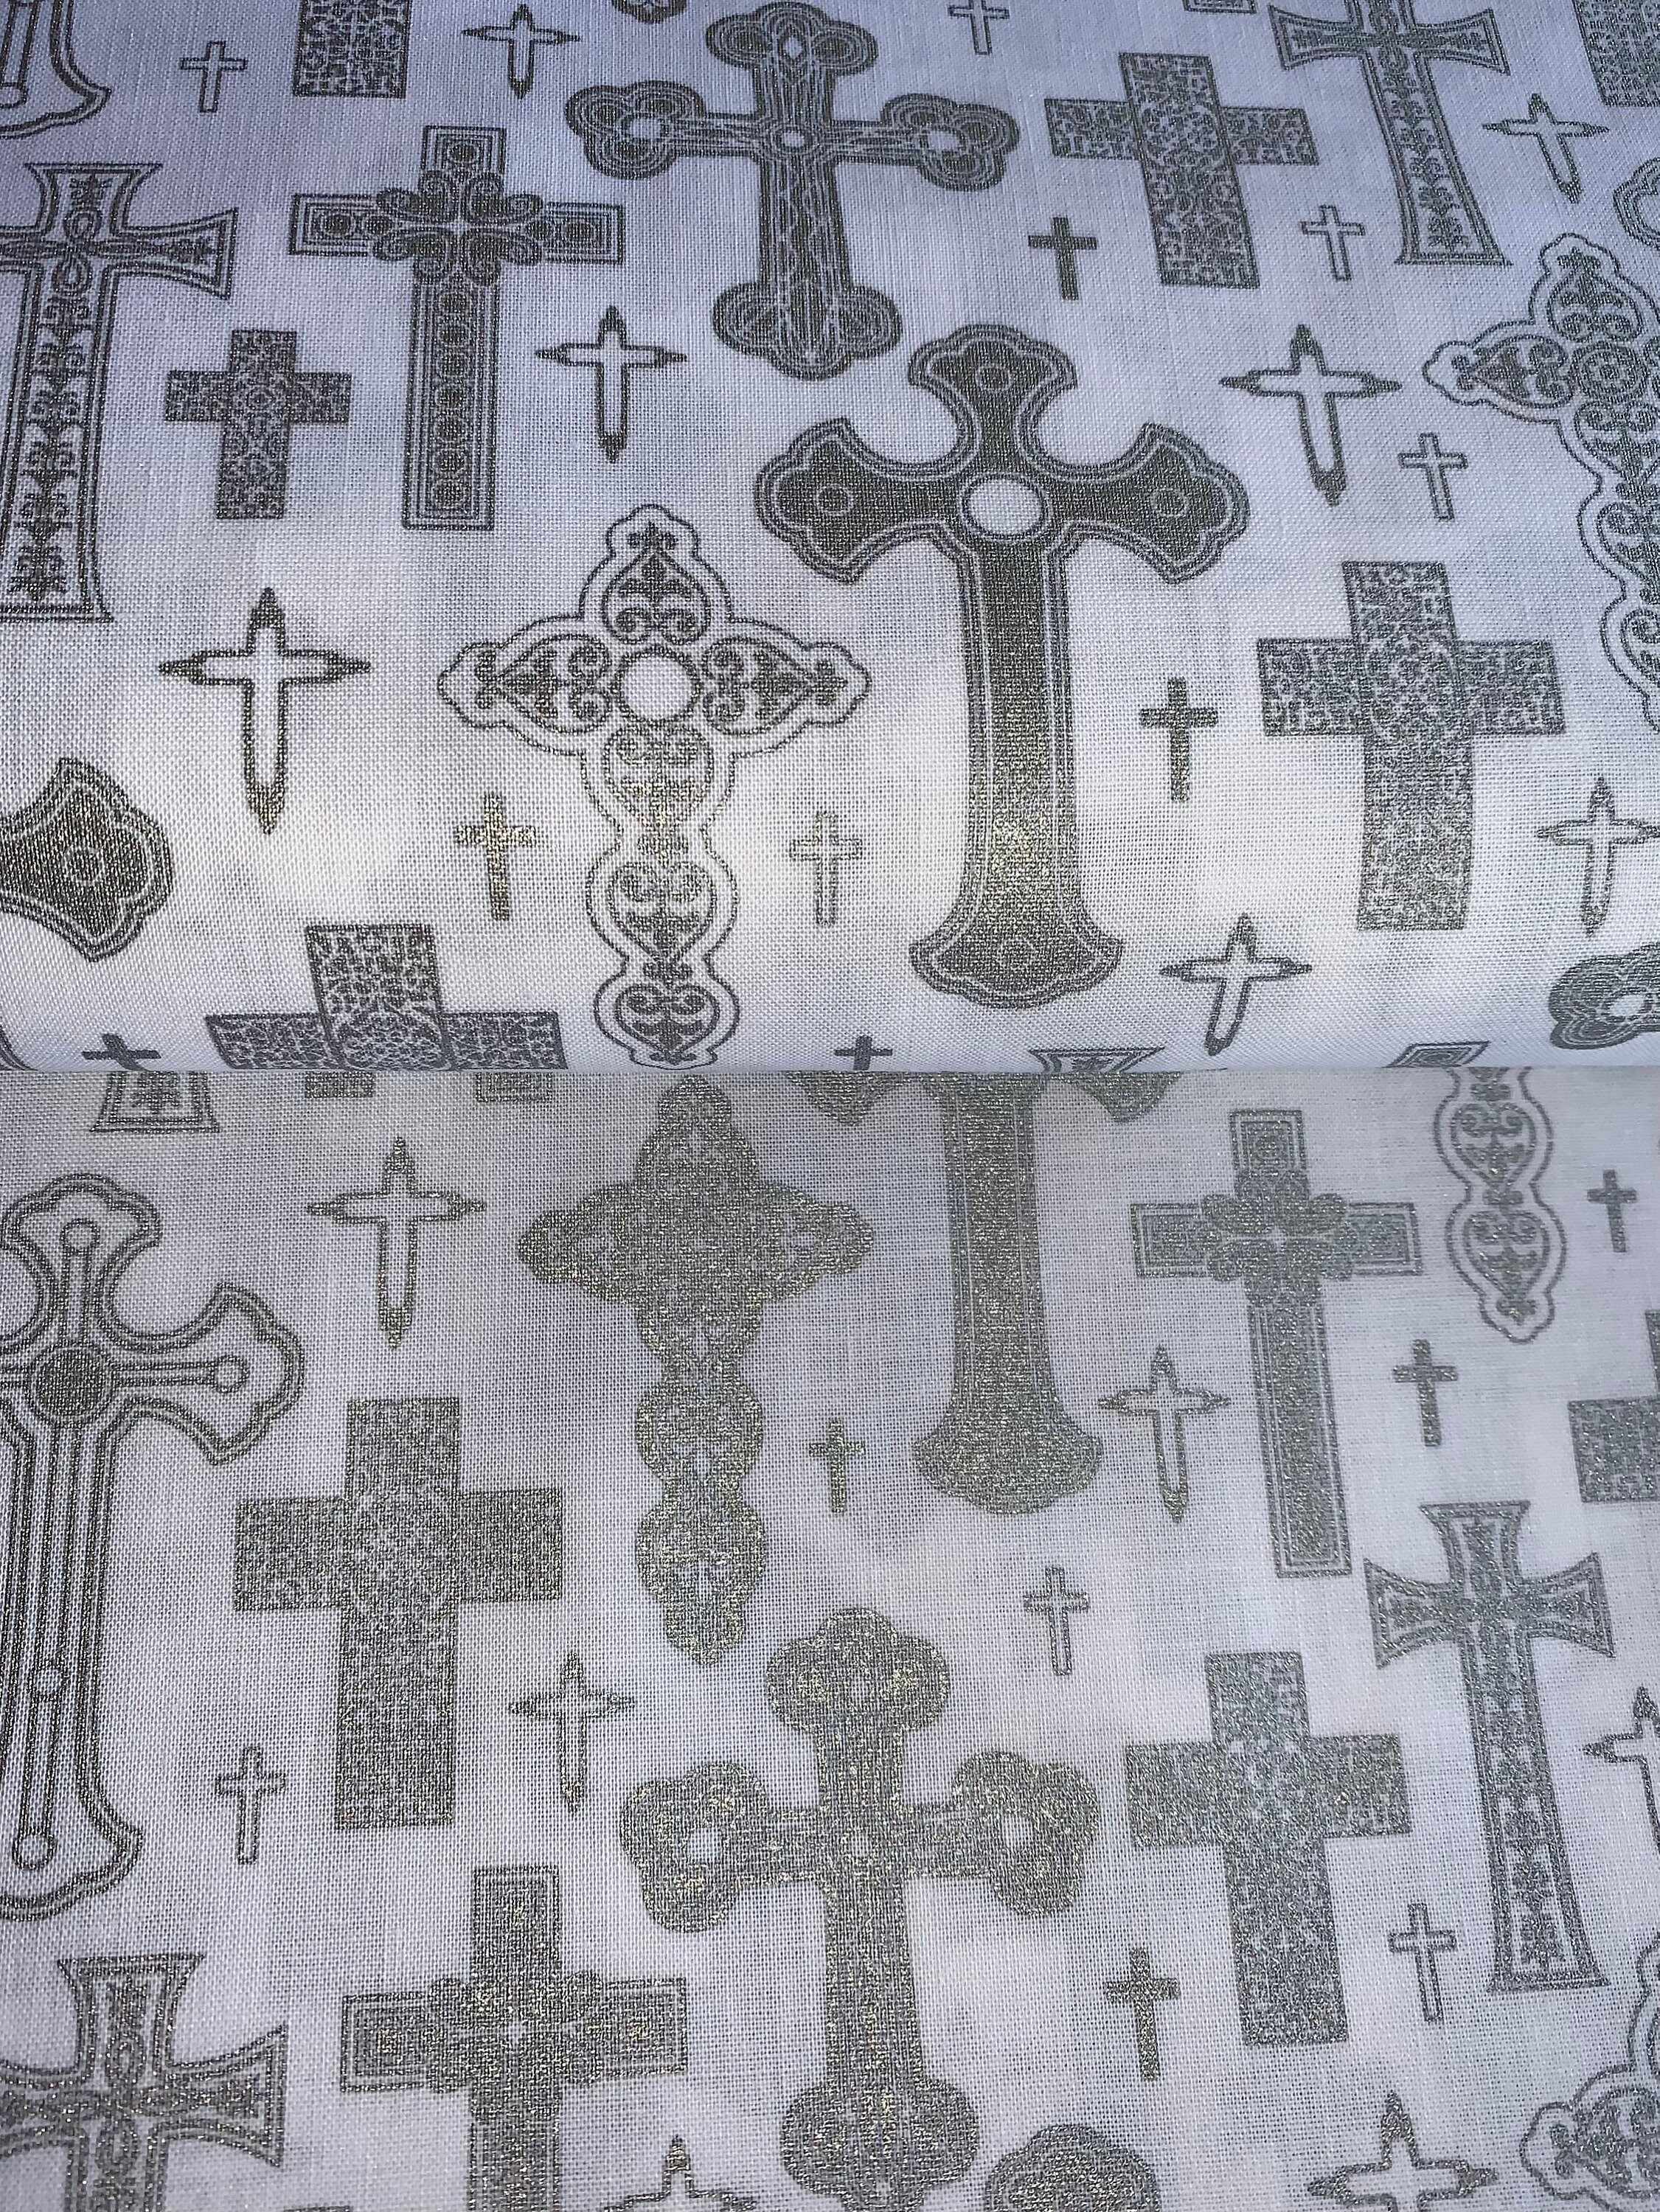 Christian Crosses Anti-pill Fleece Fabric No Sew Throw Kit 50x60 